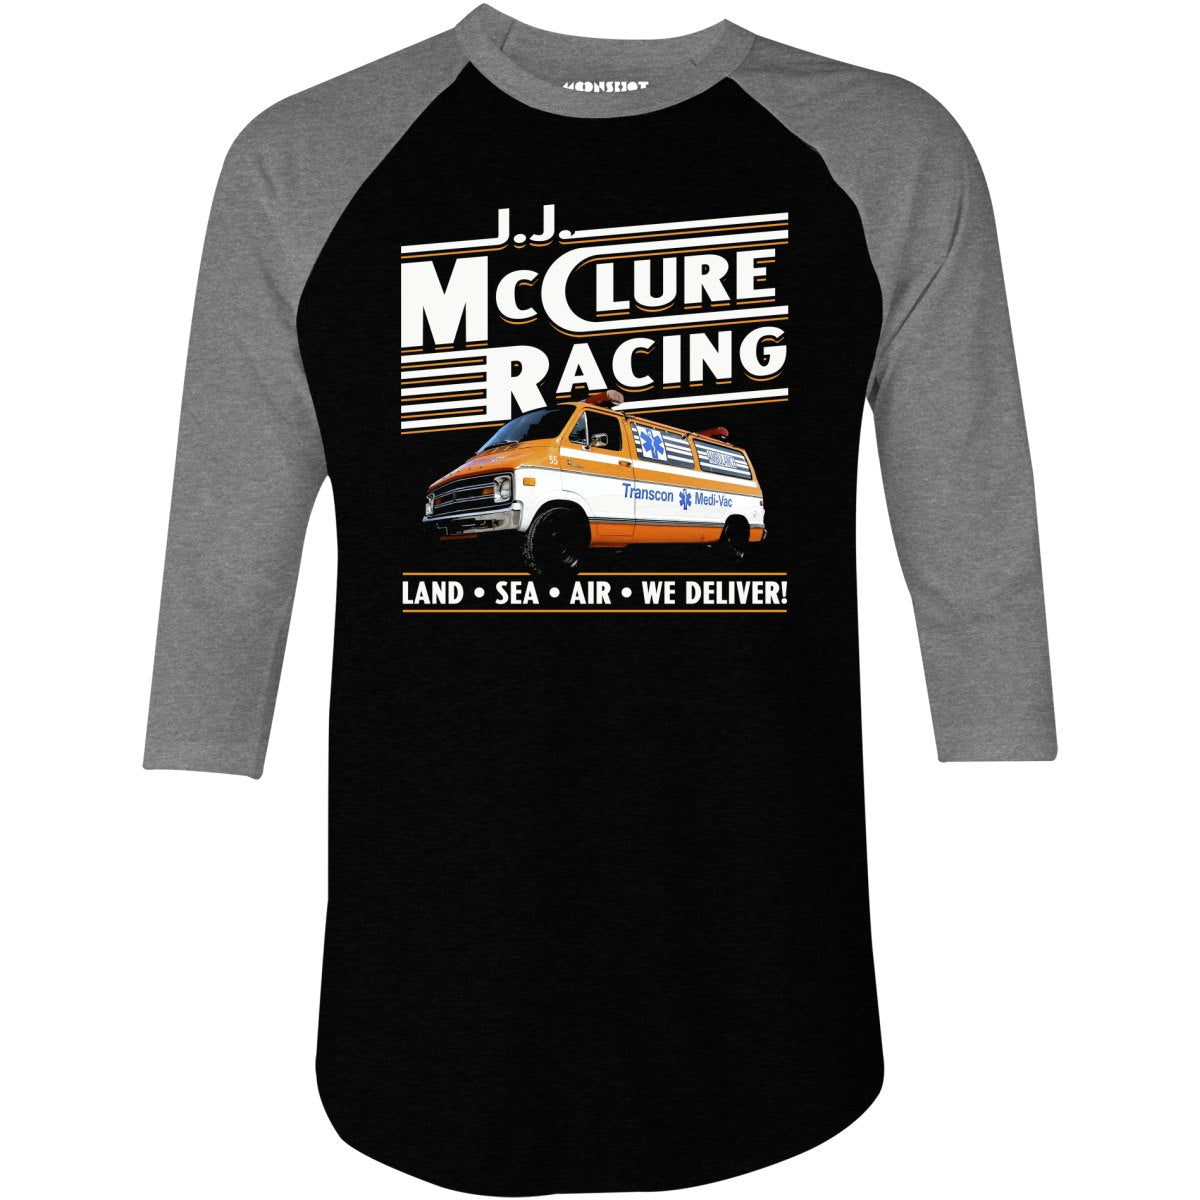 J.J. McClure Racing - 3/4 Sleeve Raglan T-Shirt